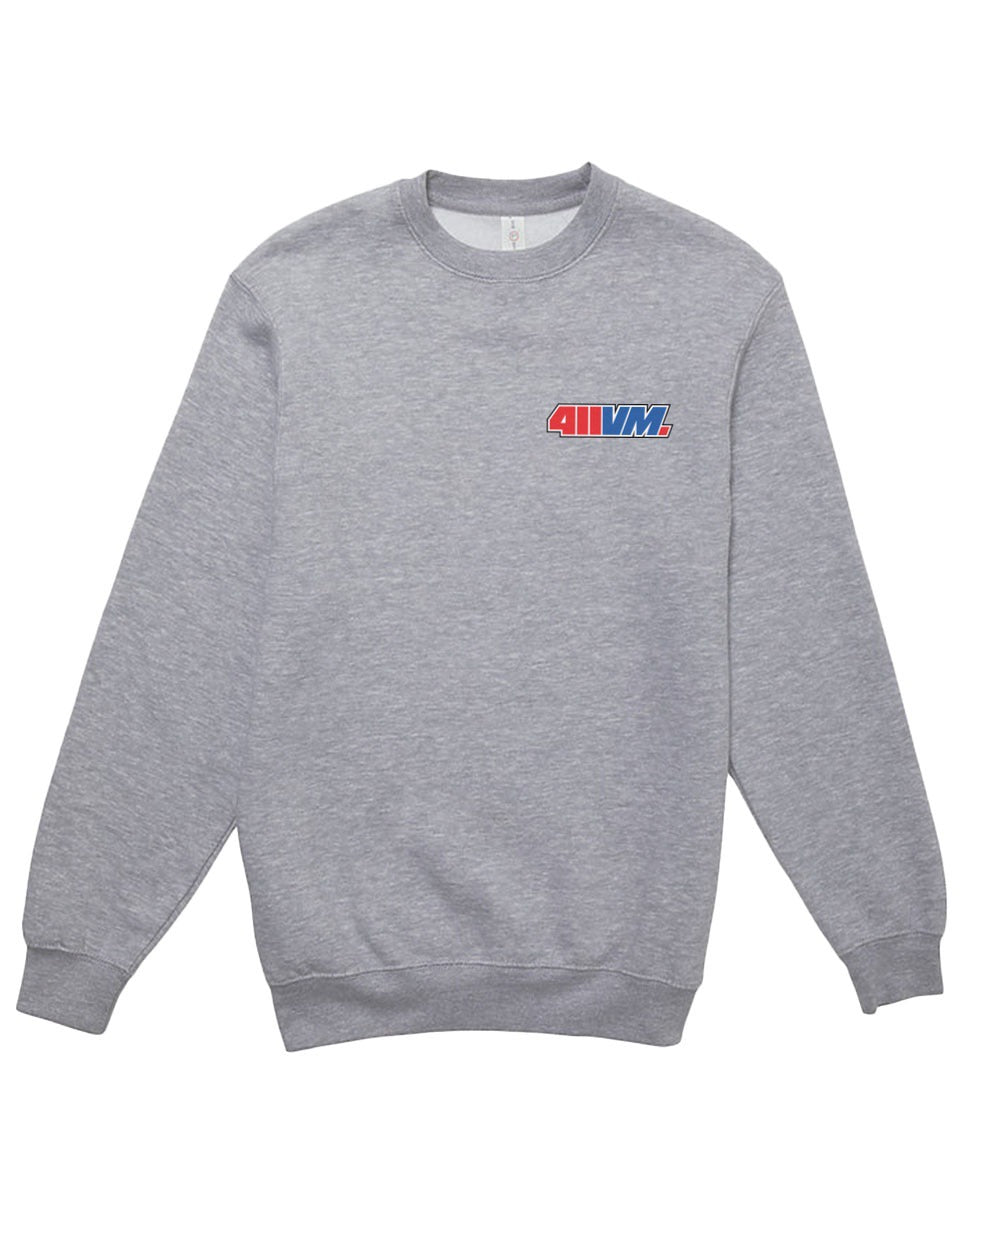 Unisex | 411VM Pocket Logo (Red/Blue) | Crewneck Sweater